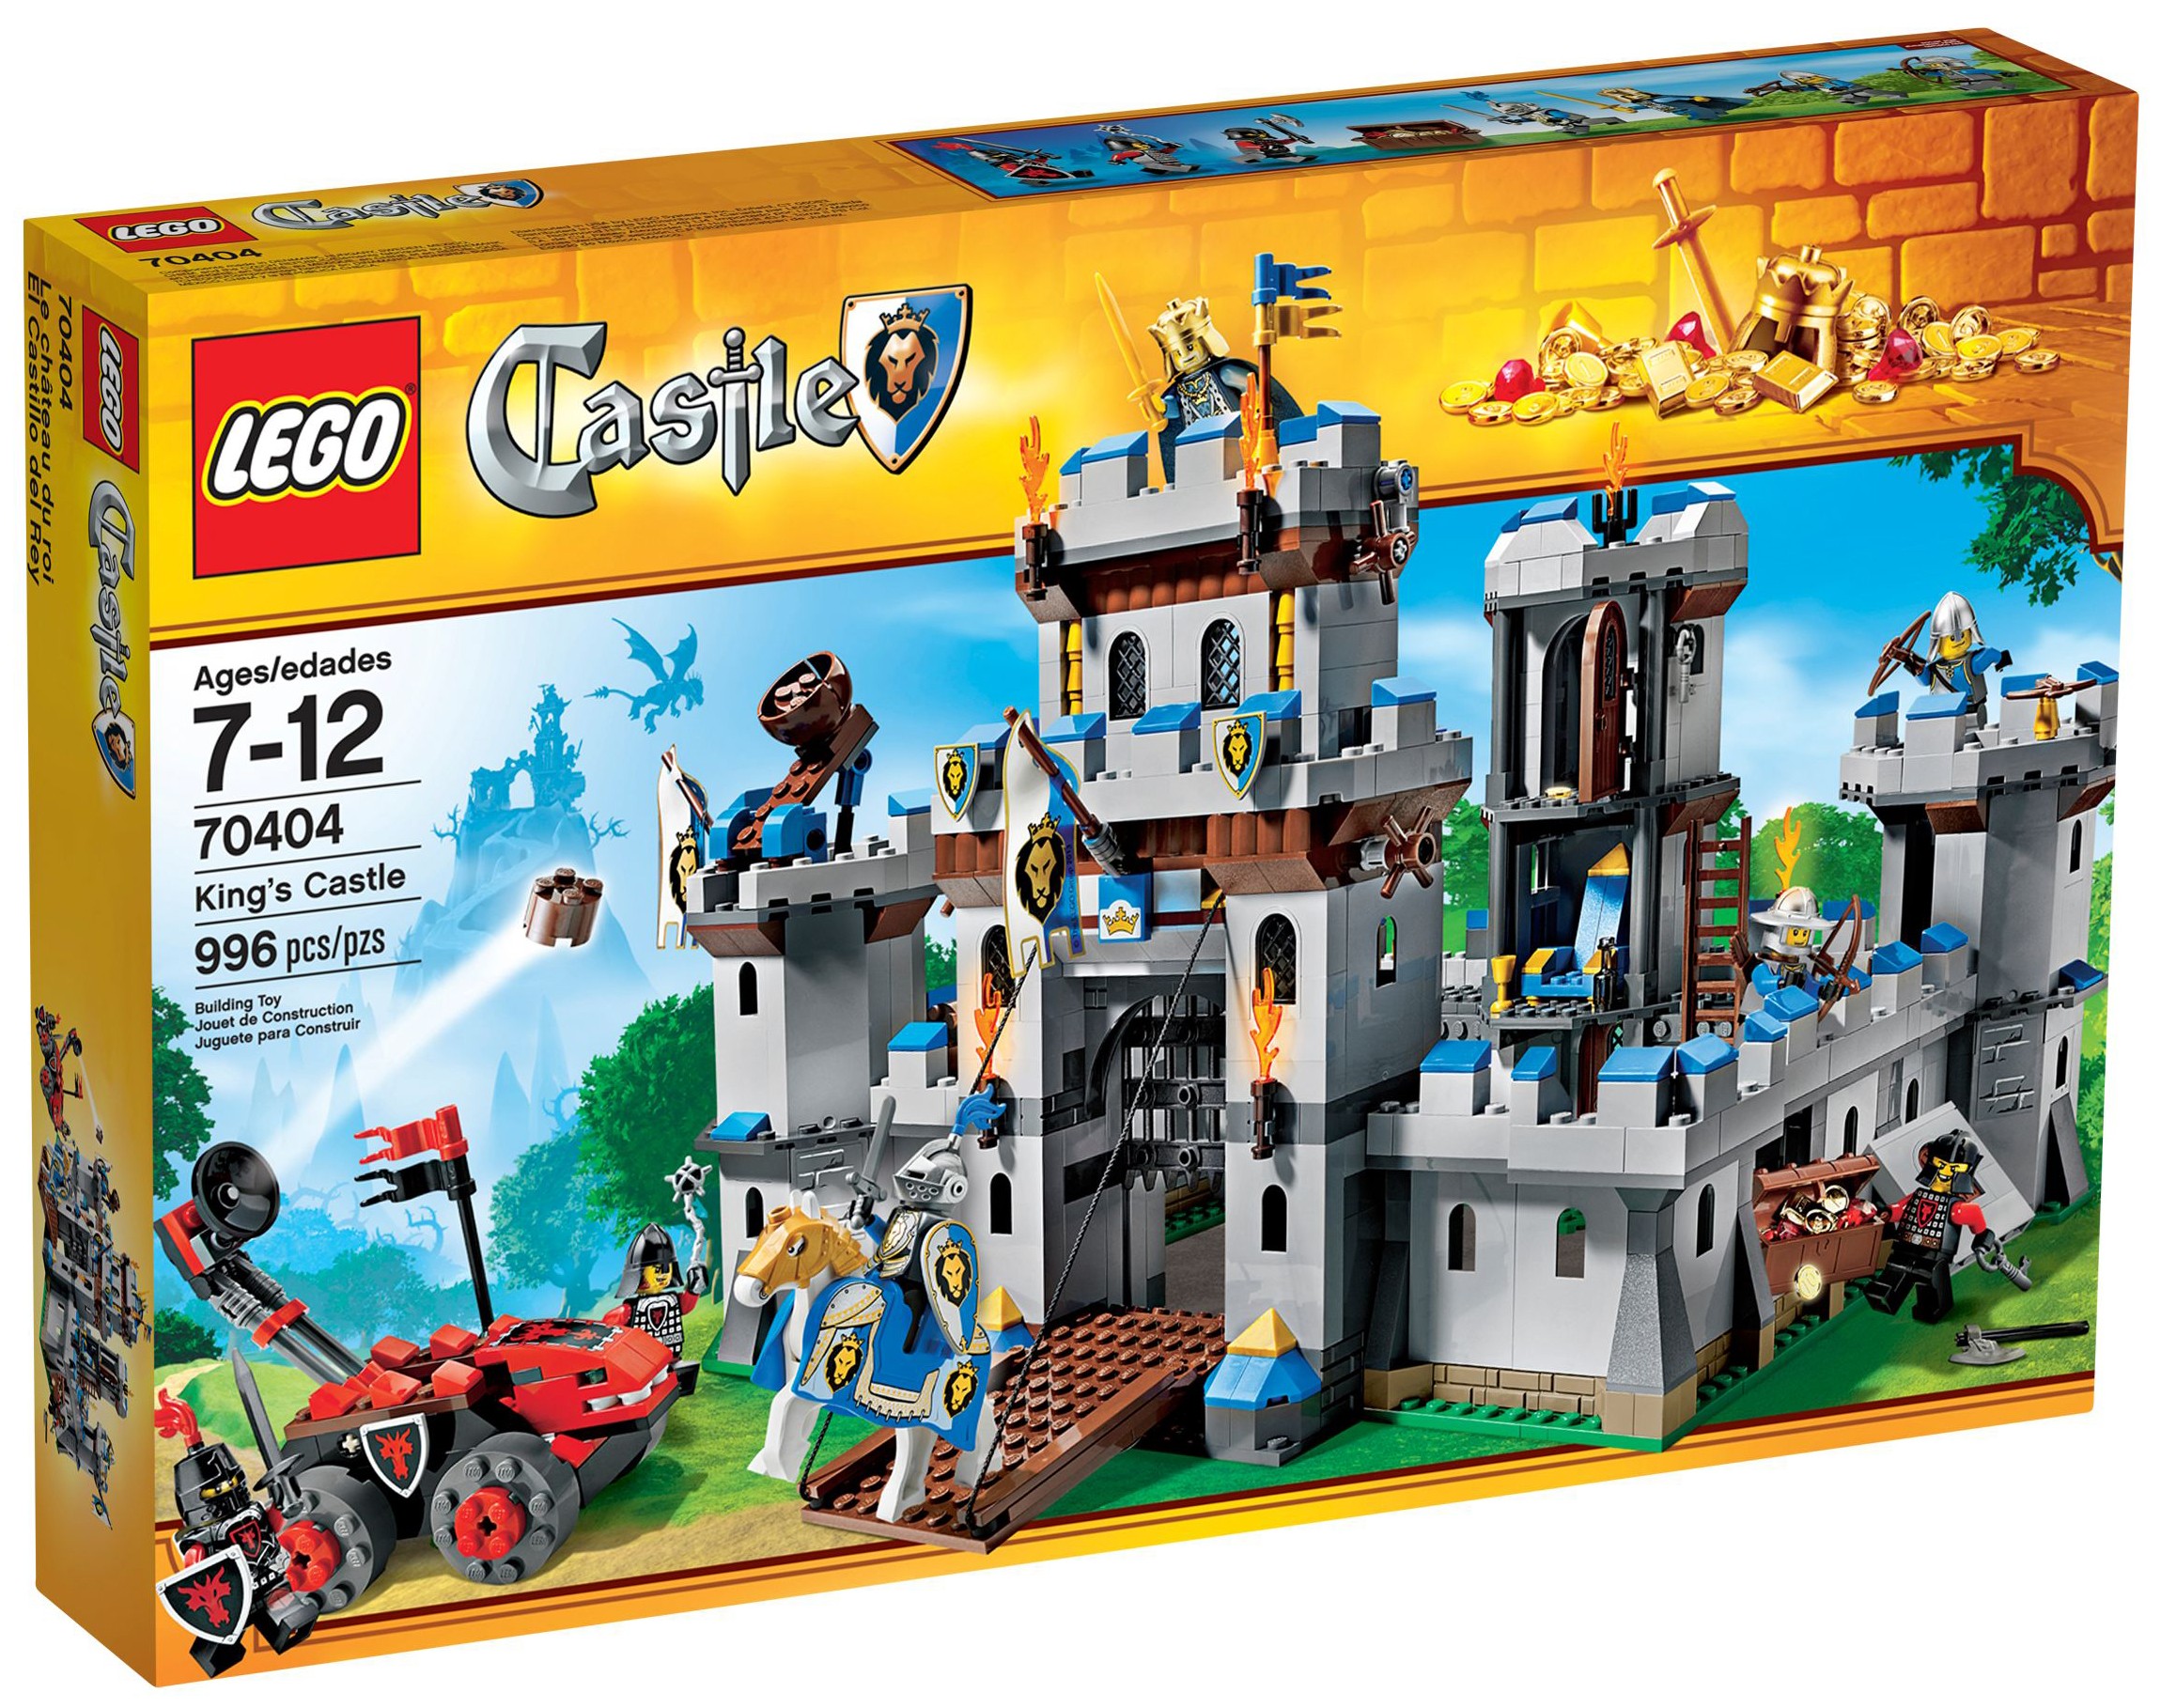 LEGO Castle 2013 Summer Sets Photos & Preview - Bricks and Bloks